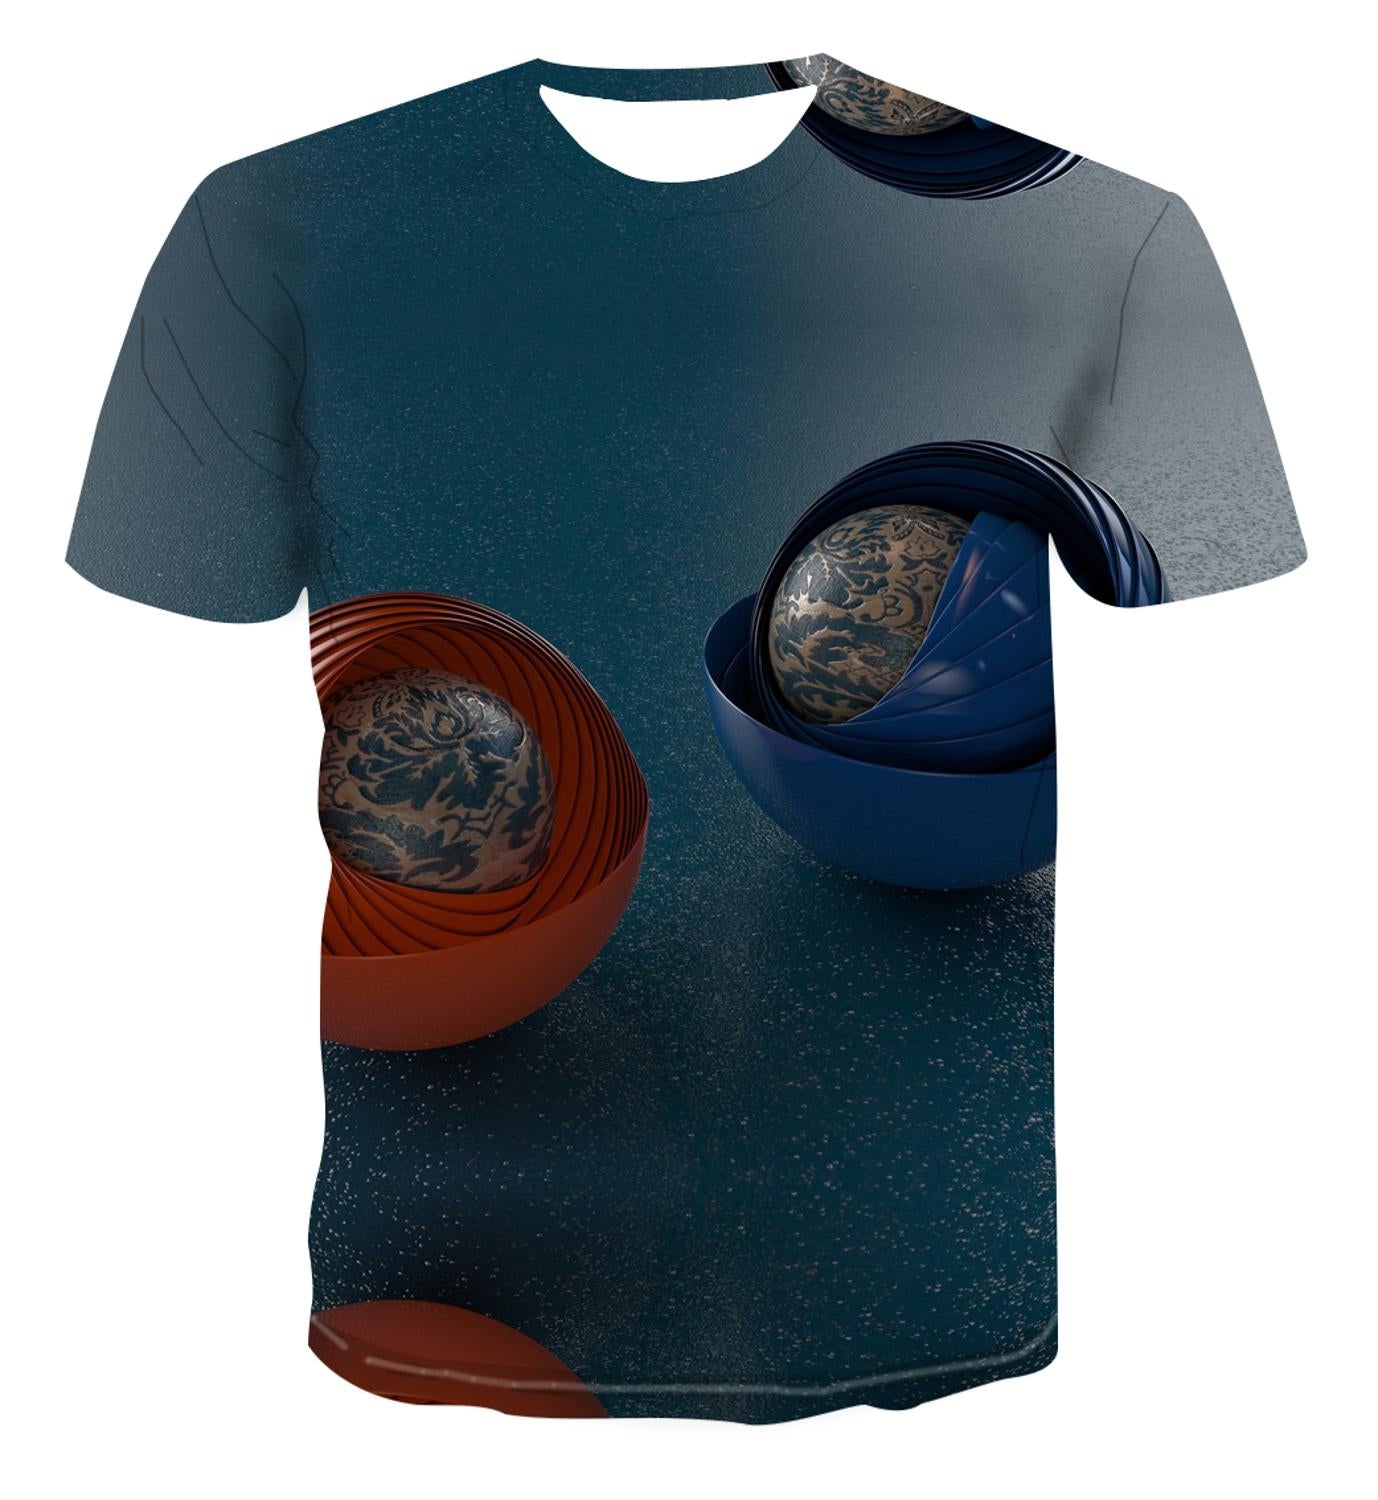 Psychedelic T-Shirt Men's 3D T-Shirt Vertigo Printed T-Shirt Short Sleeve Casual Summer Top S-6xl